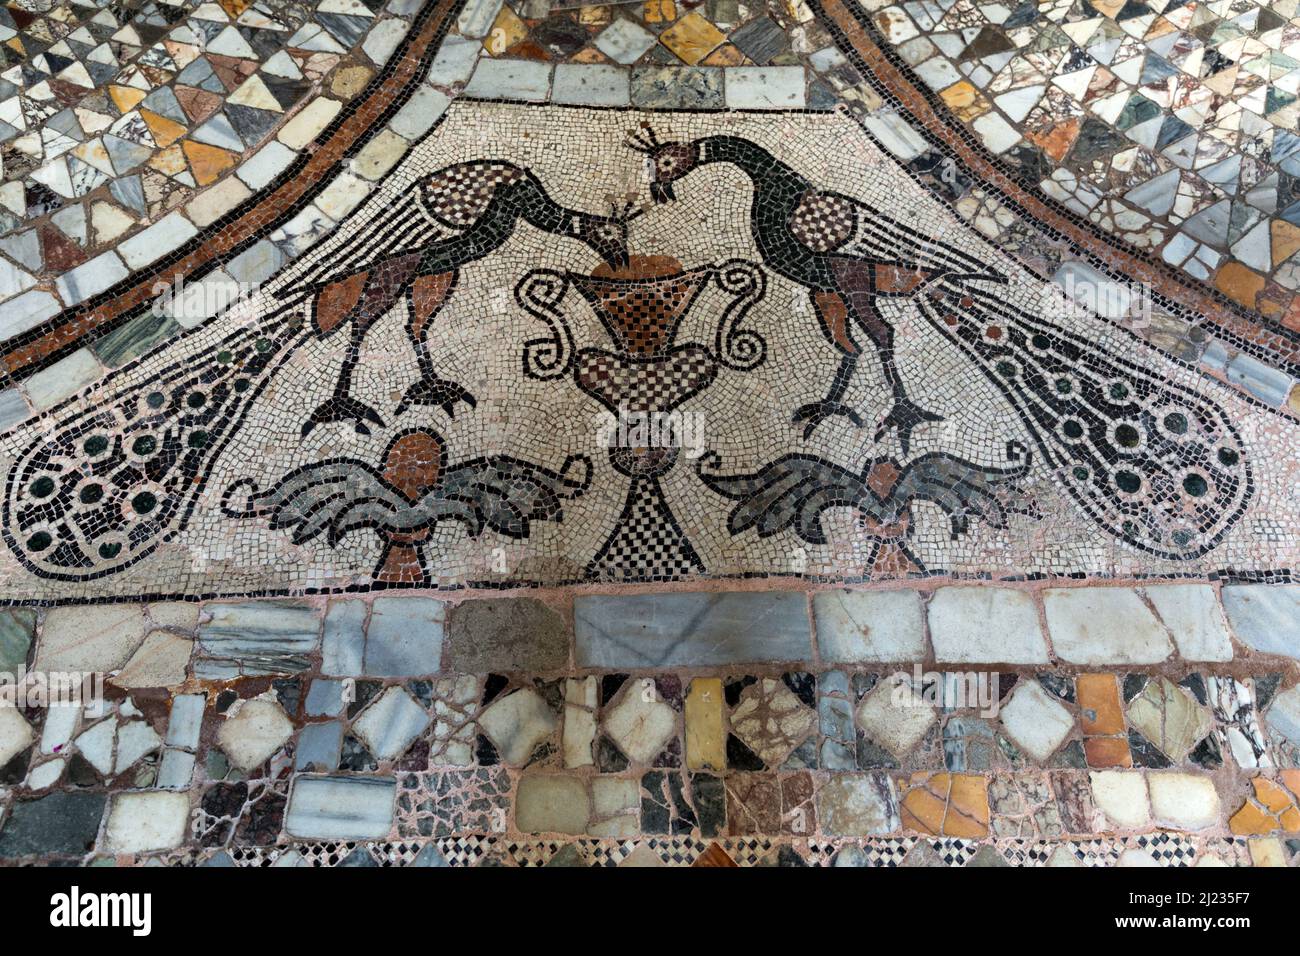 Italy,Venice,Murano, Basilica dei Santi Maria e Donato circa 1140, mosaic tile artwork depicting peacocks inlaid in the floor Stock Photo